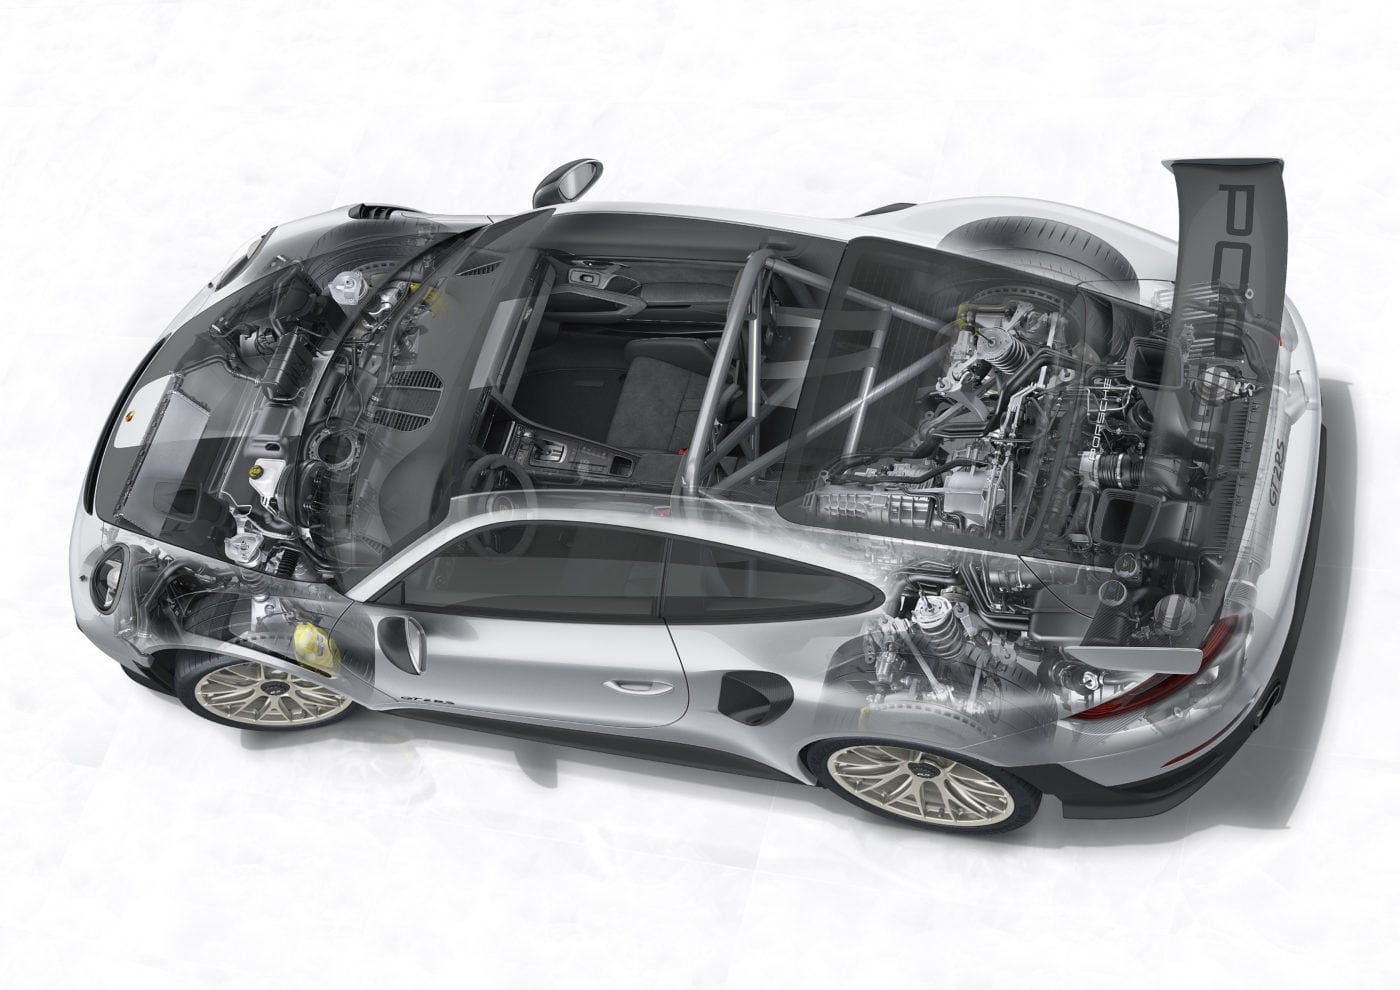 Porsche 911 GT2 RS Cutaway Shows The PDK Transmission